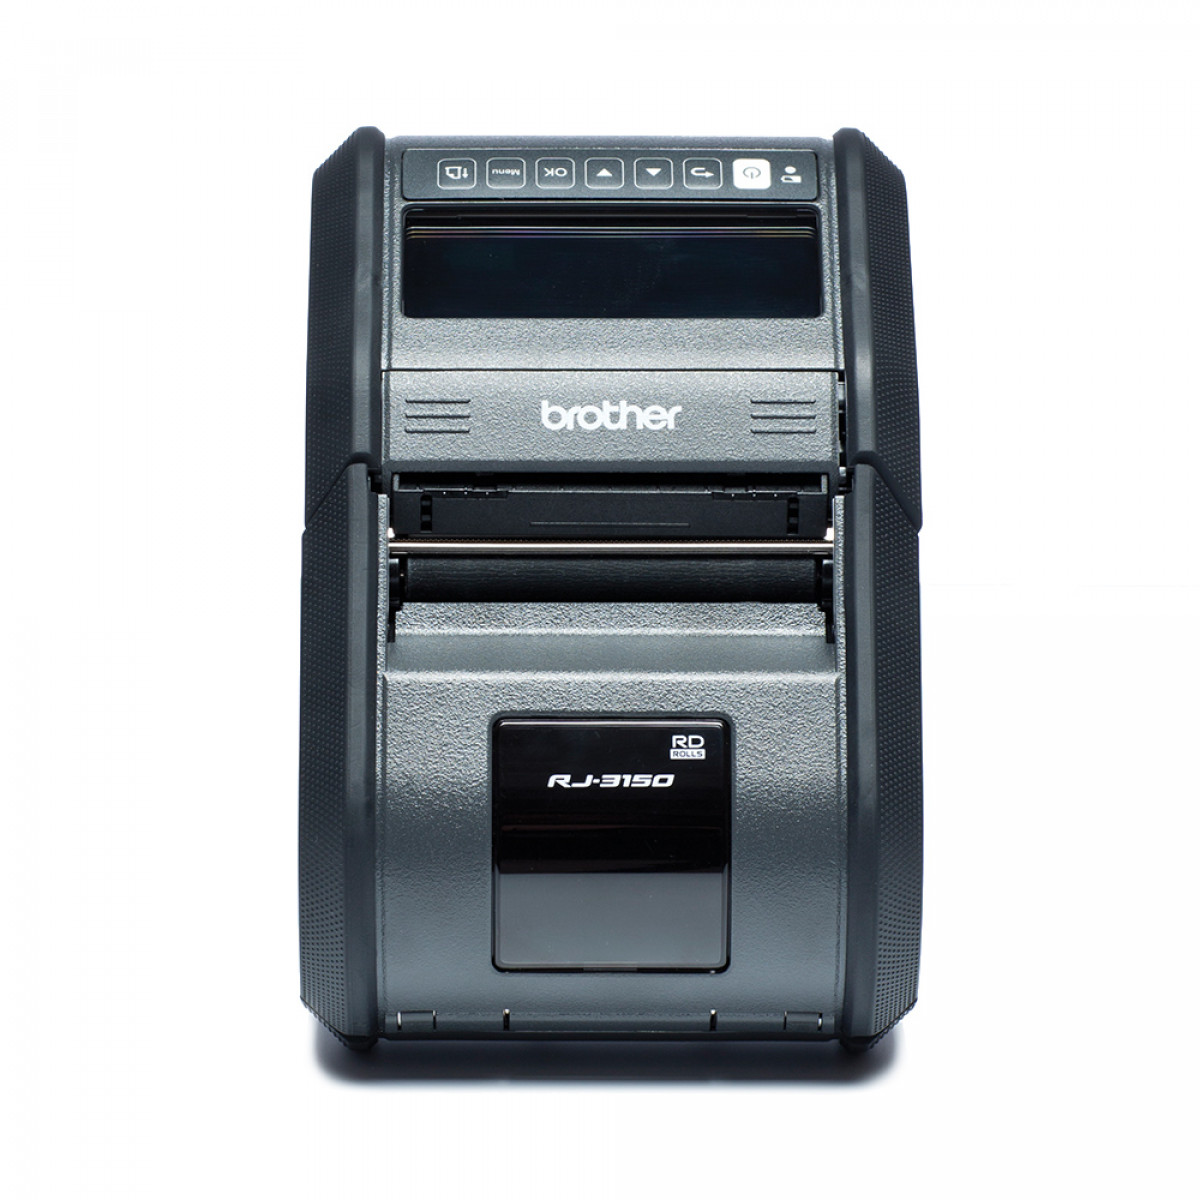 Brother RJ-3150 mobile receipt printer